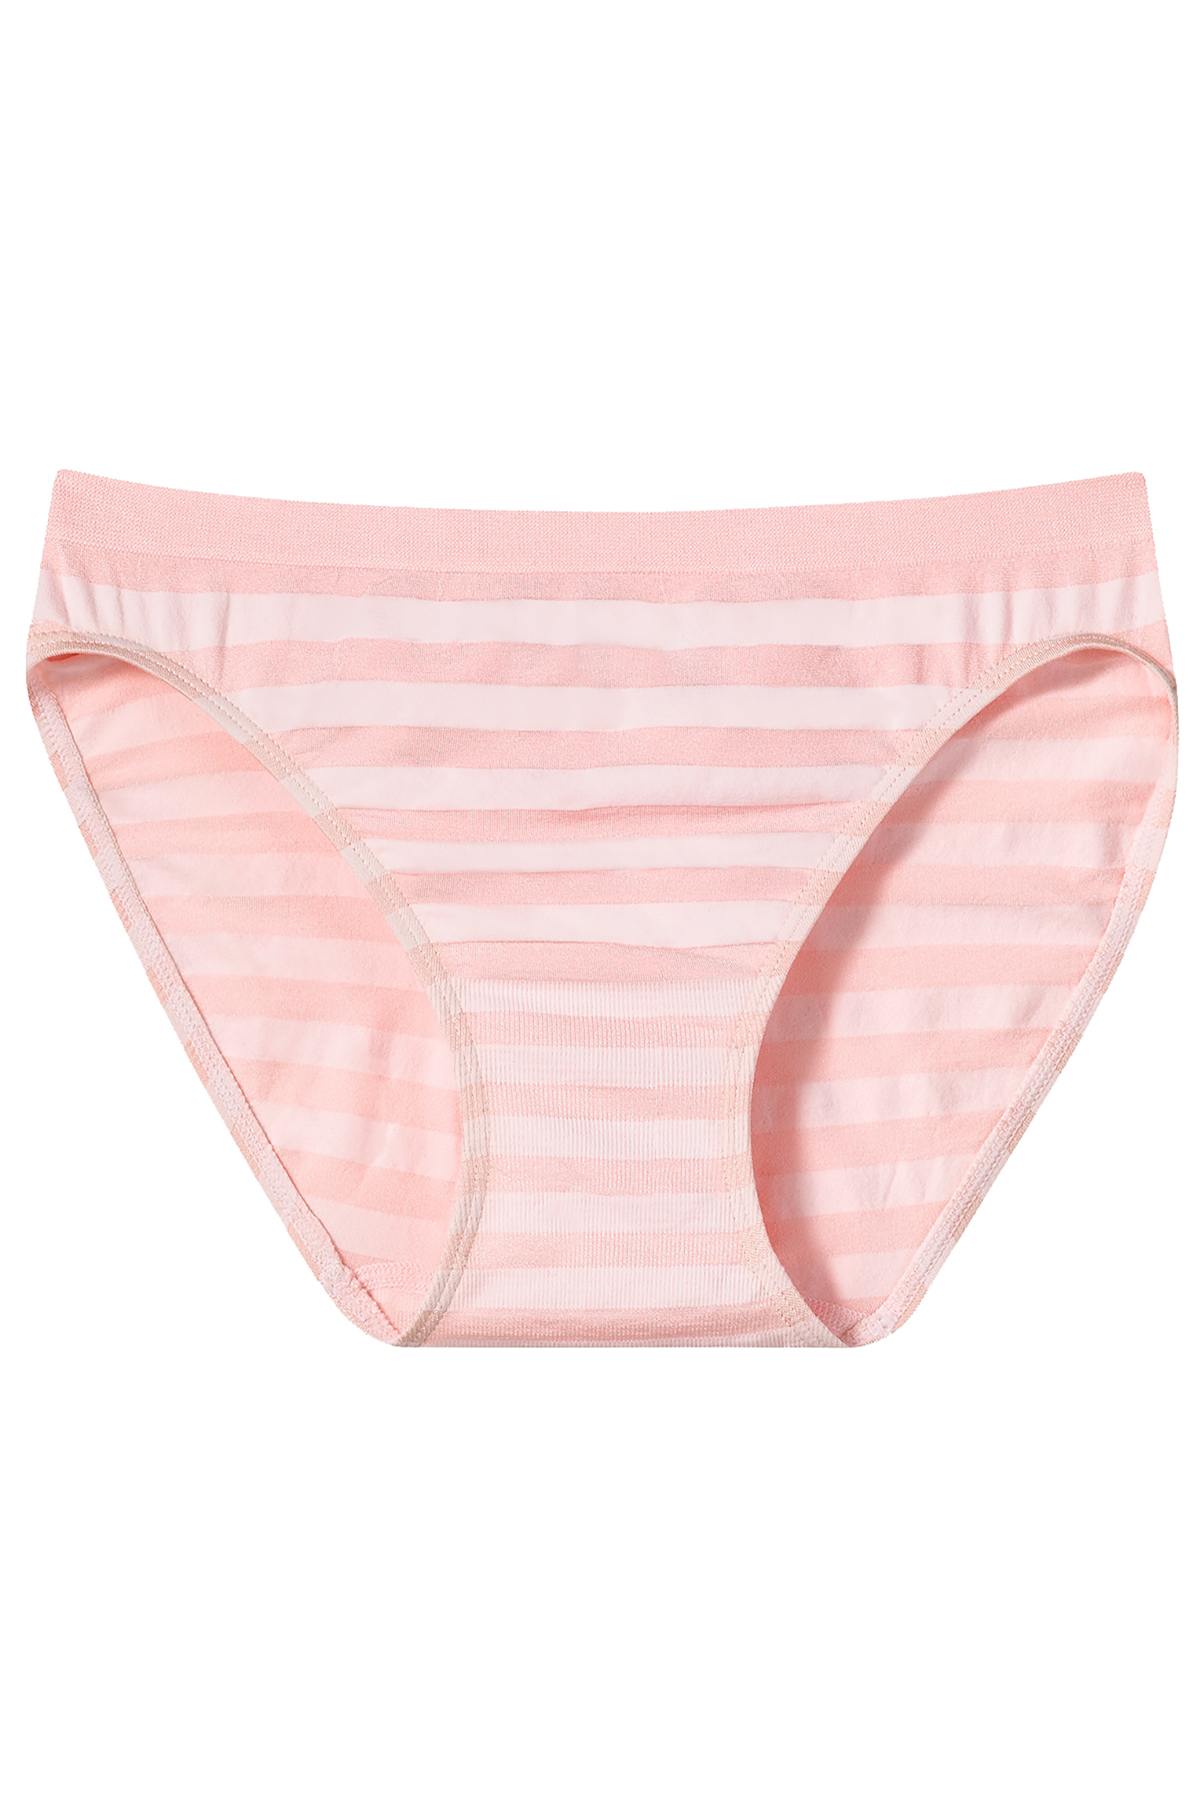 Jockey Soft Poppy Pink Seamfree Matte/Shine Bikini Brief